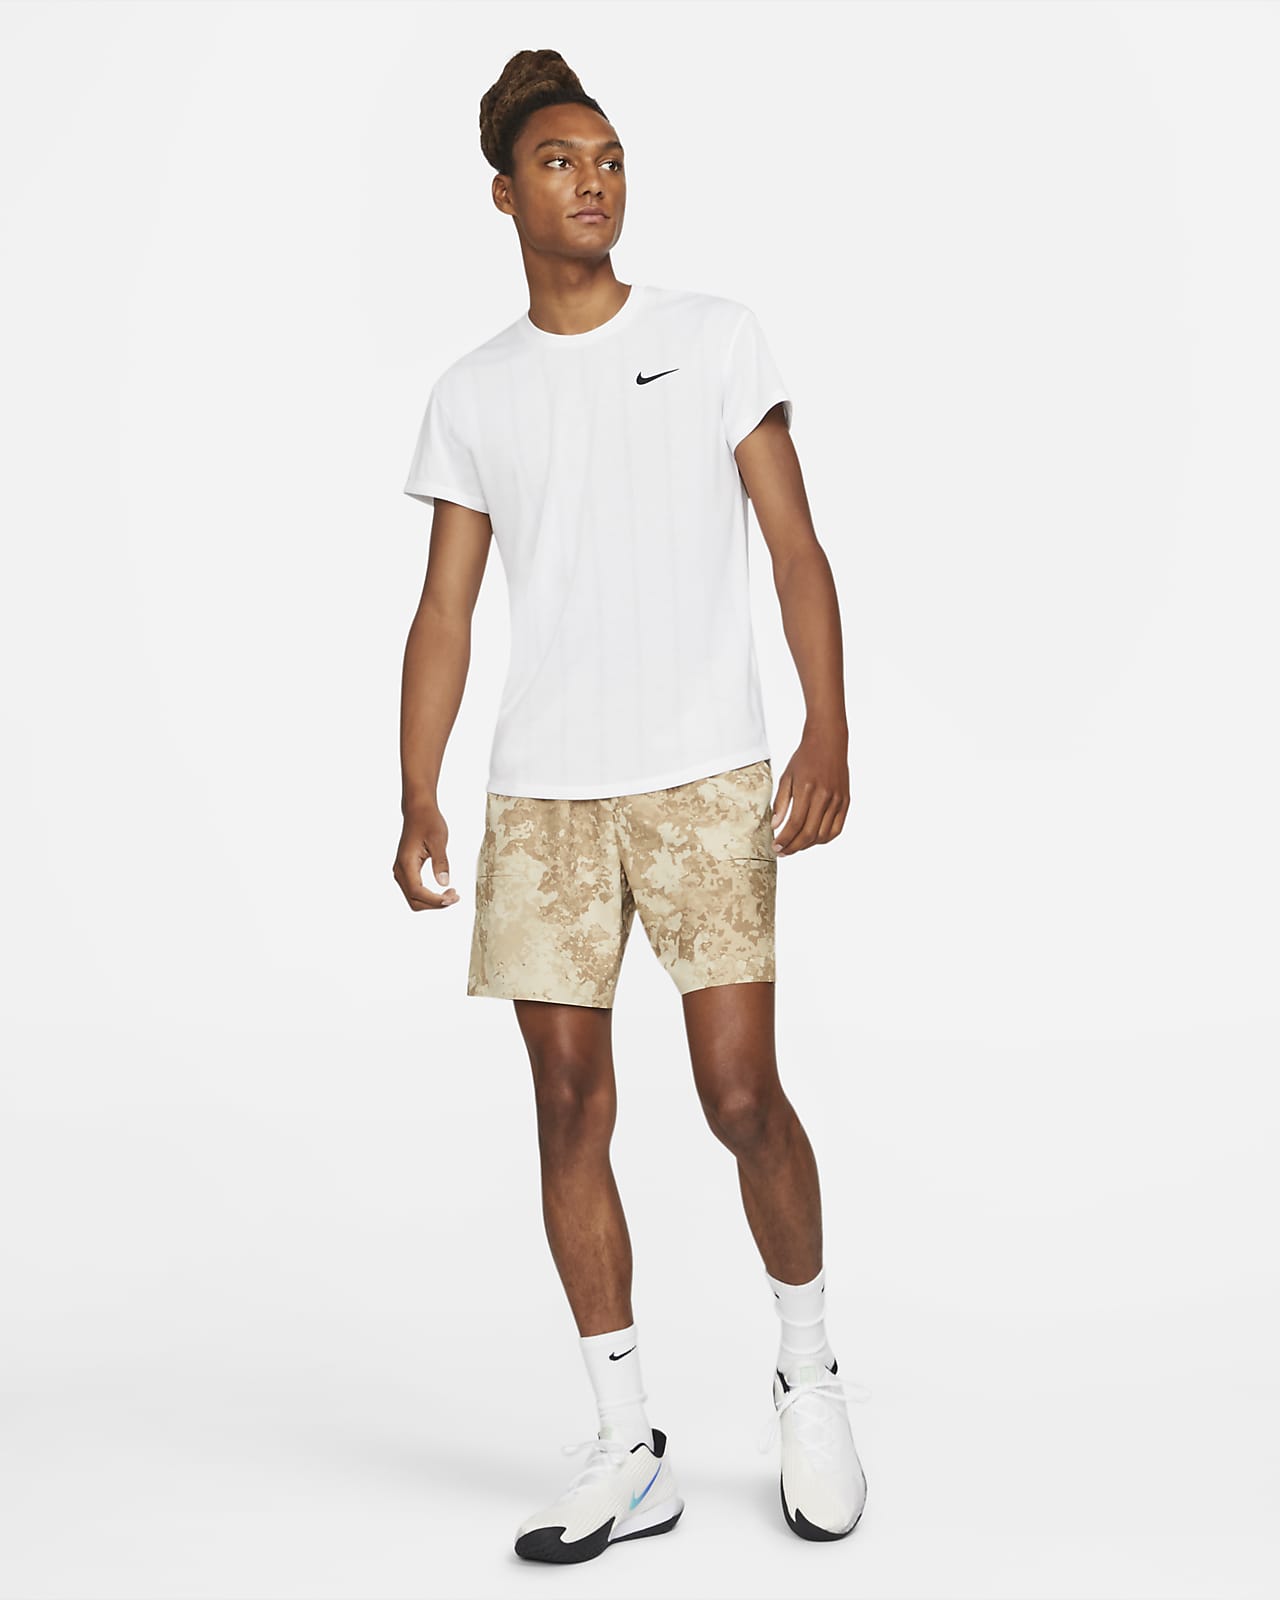 men's nike tennis flex shorts